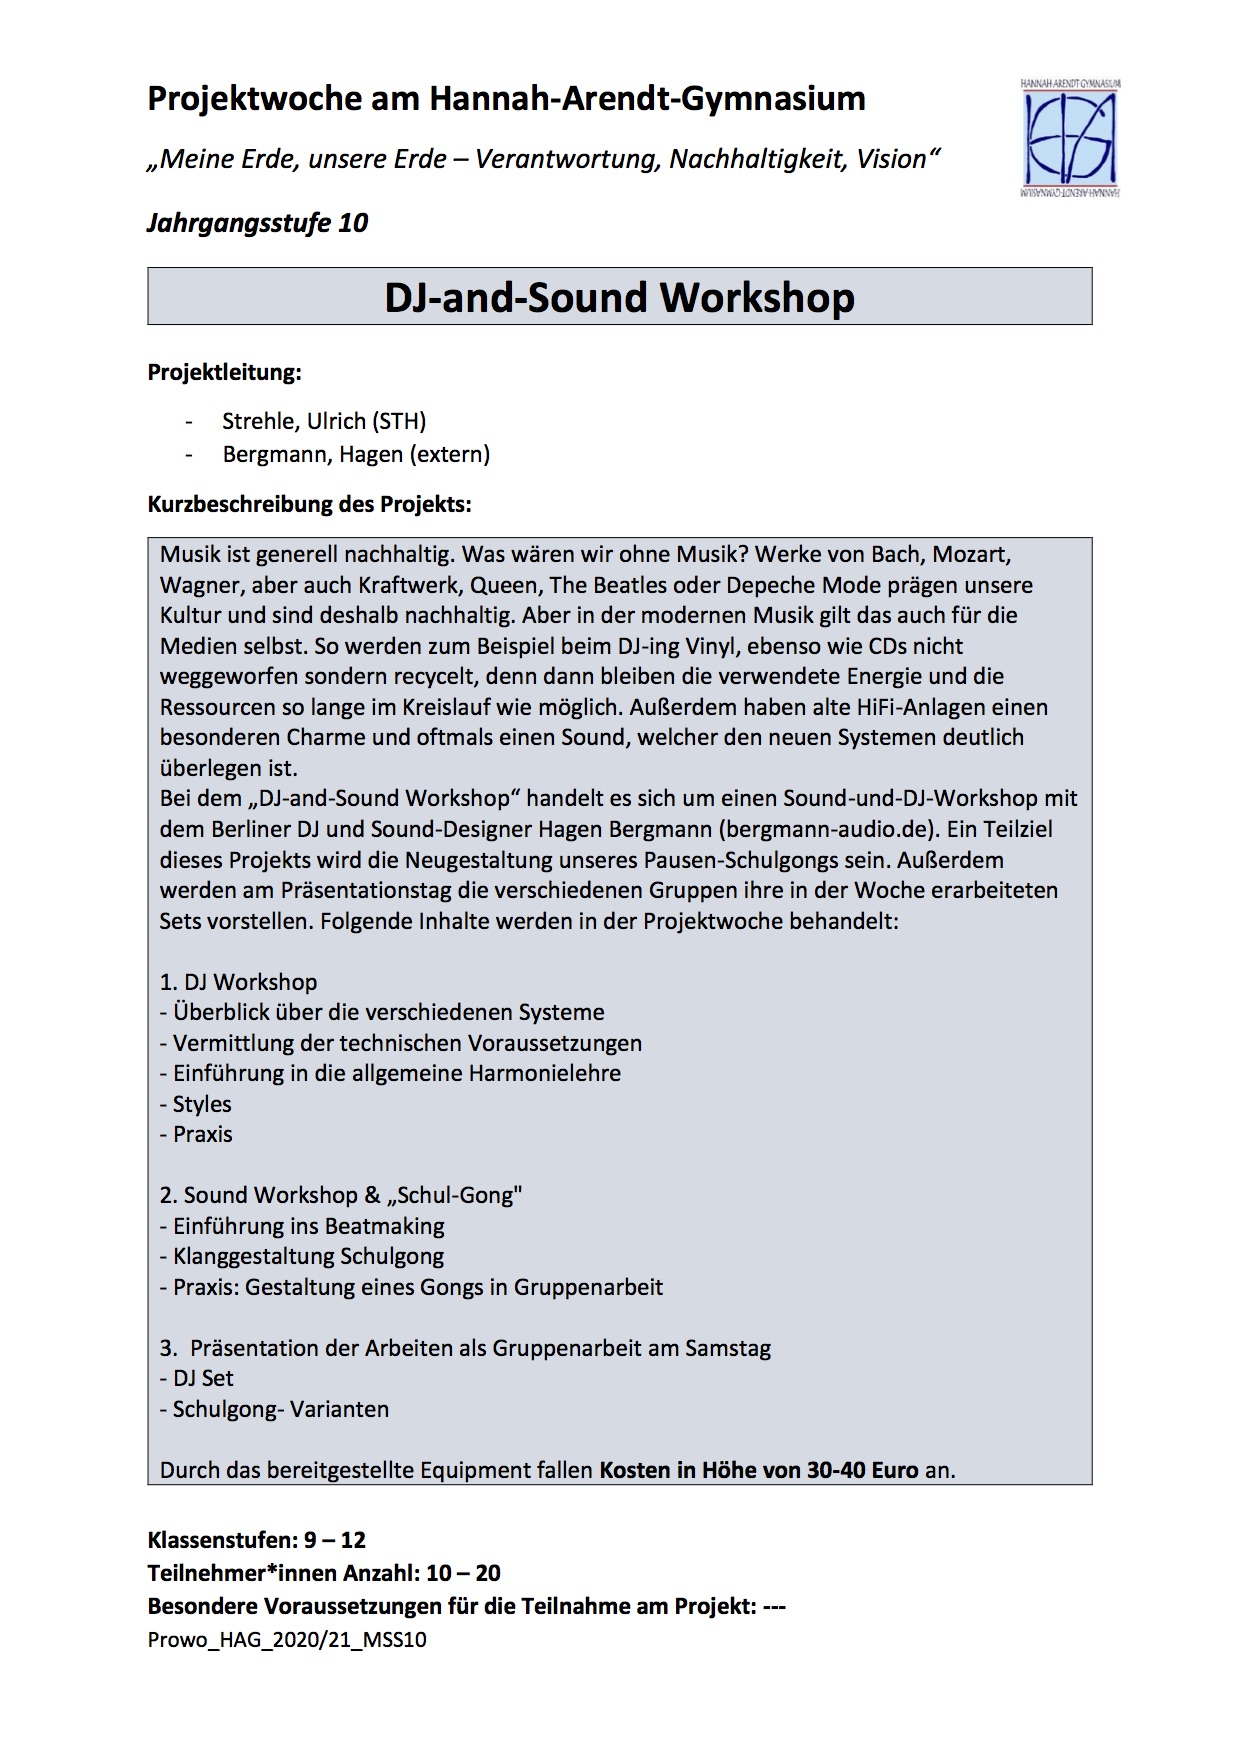 DJ-and-Sound Workshop 